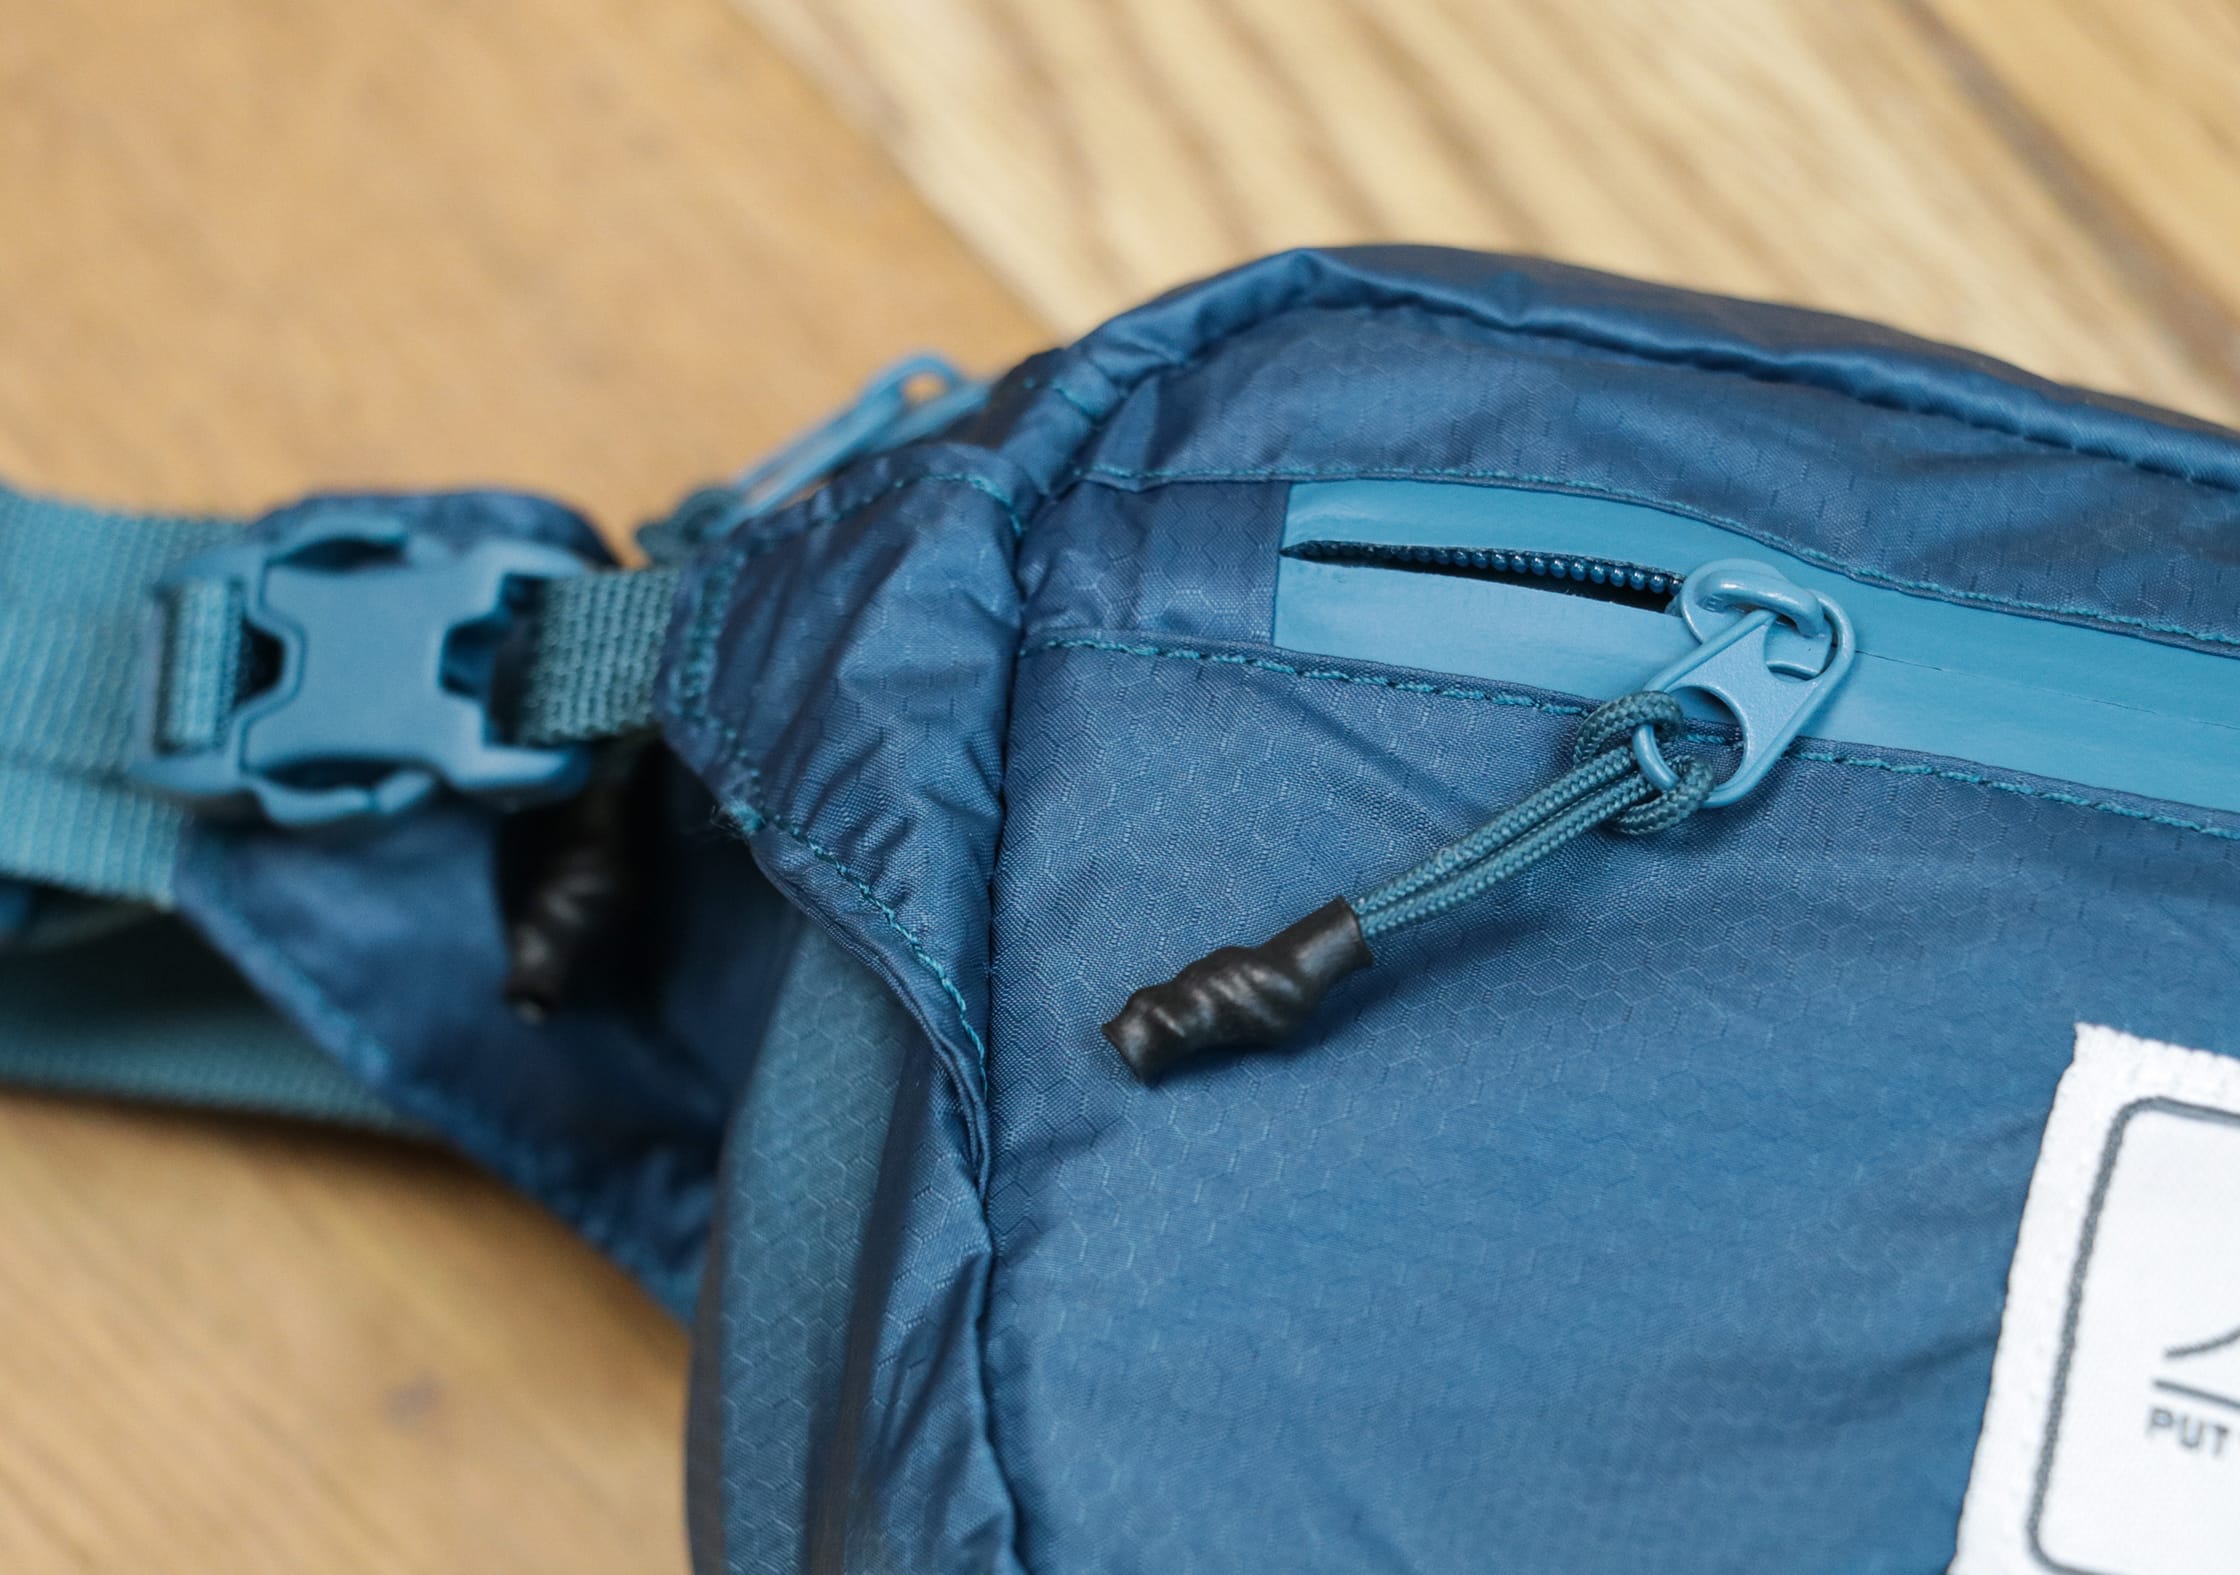 Weather-Resistant Sealed SBS Zipper